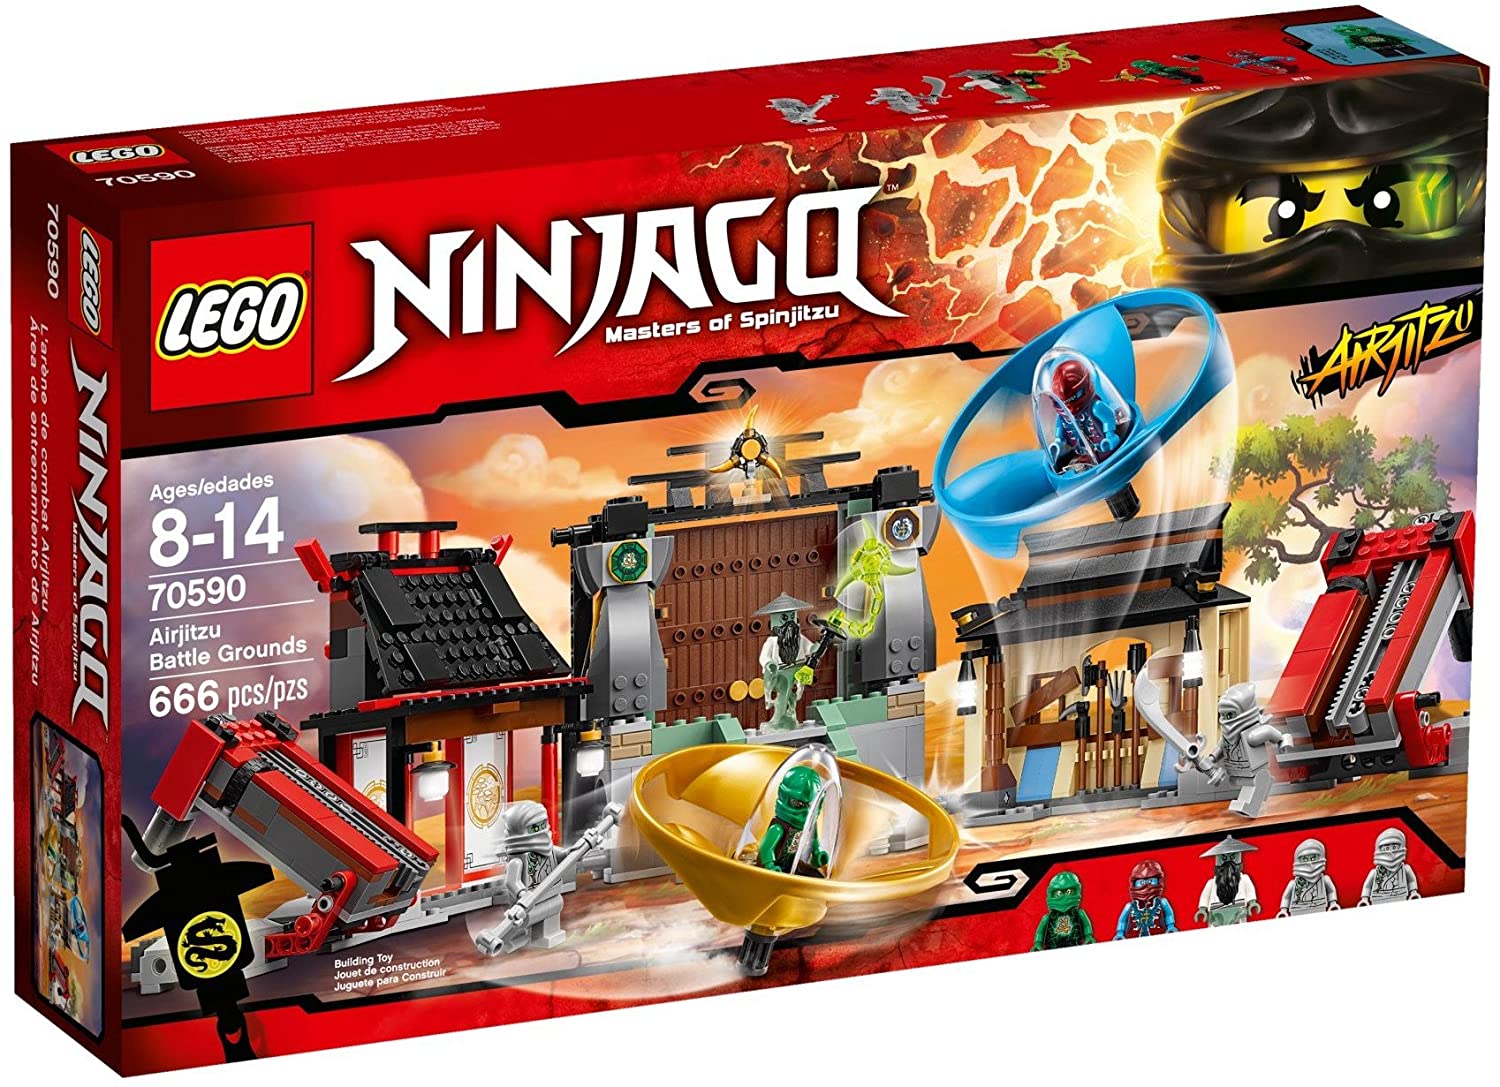 LEGO Ninjago Airjitzu Battle Grounds 666pcs Building Set - Building Games